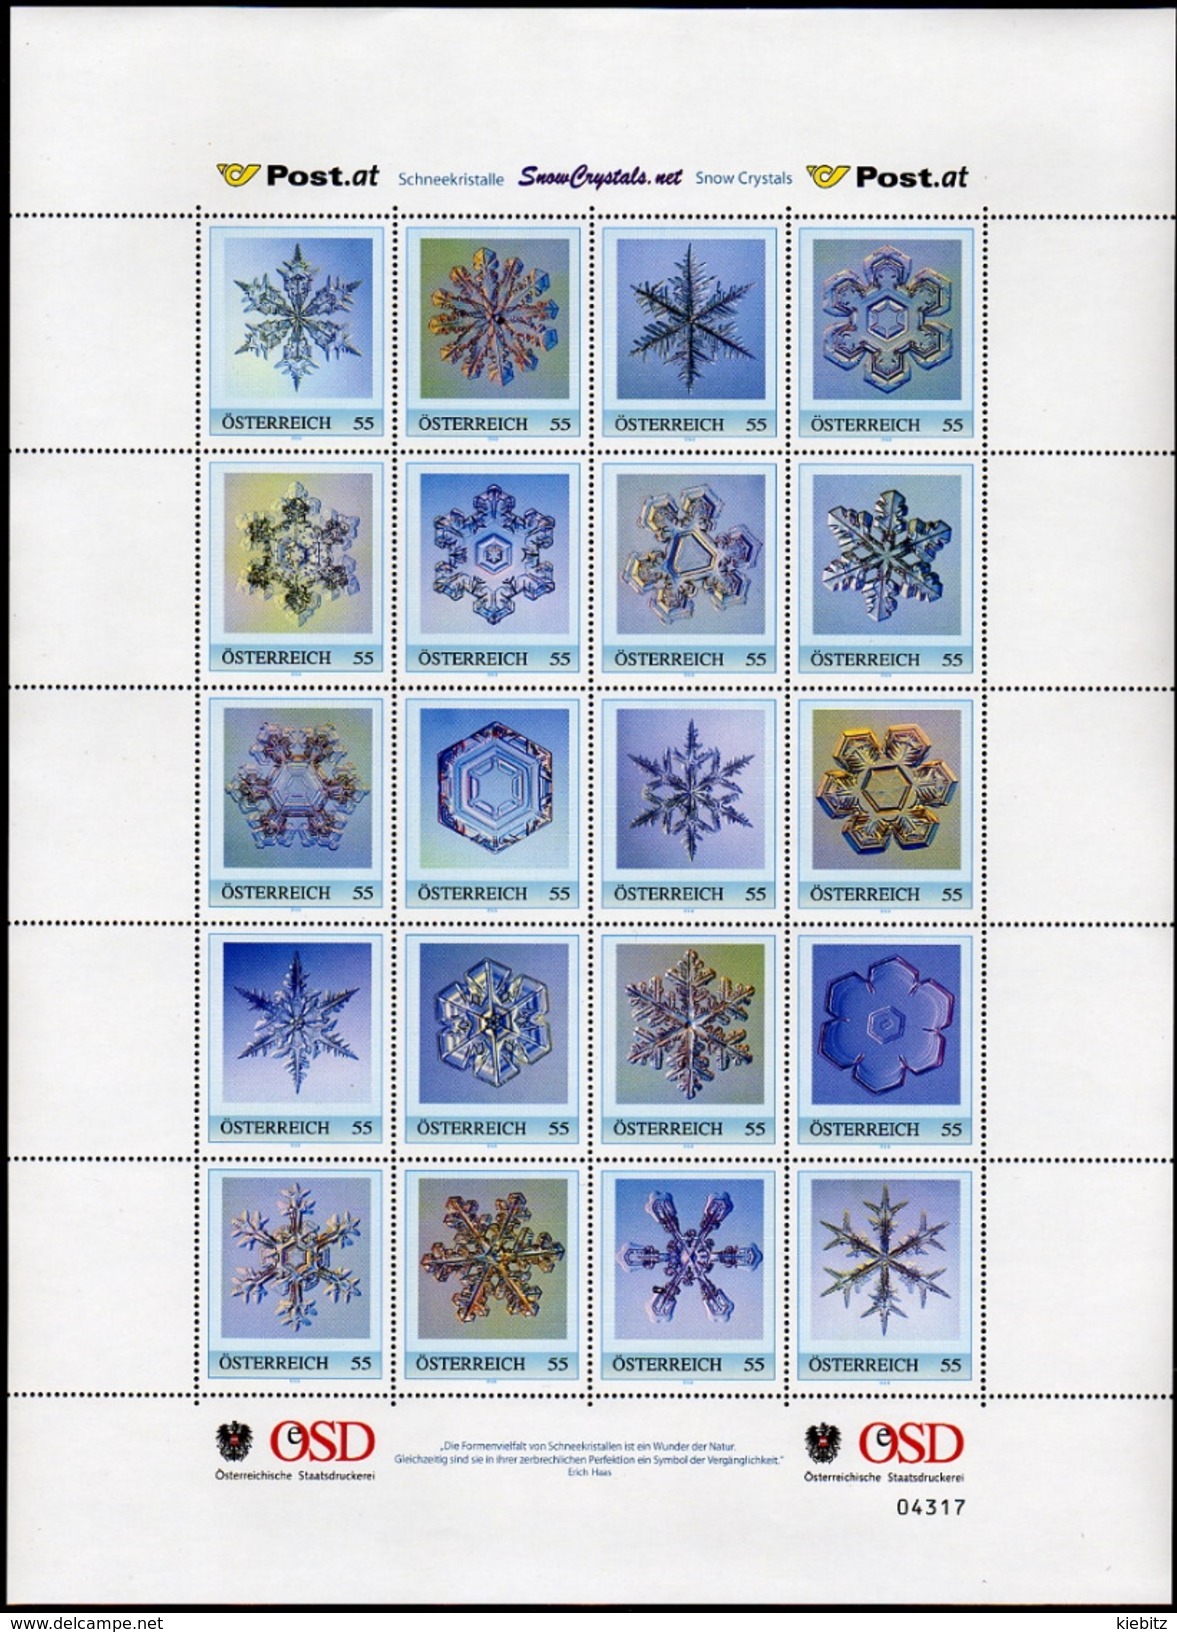 ÖSTERREICH 2005 ** Schneekristalle / Snow Crystals - PM Personalized Stamps MNH - Natur